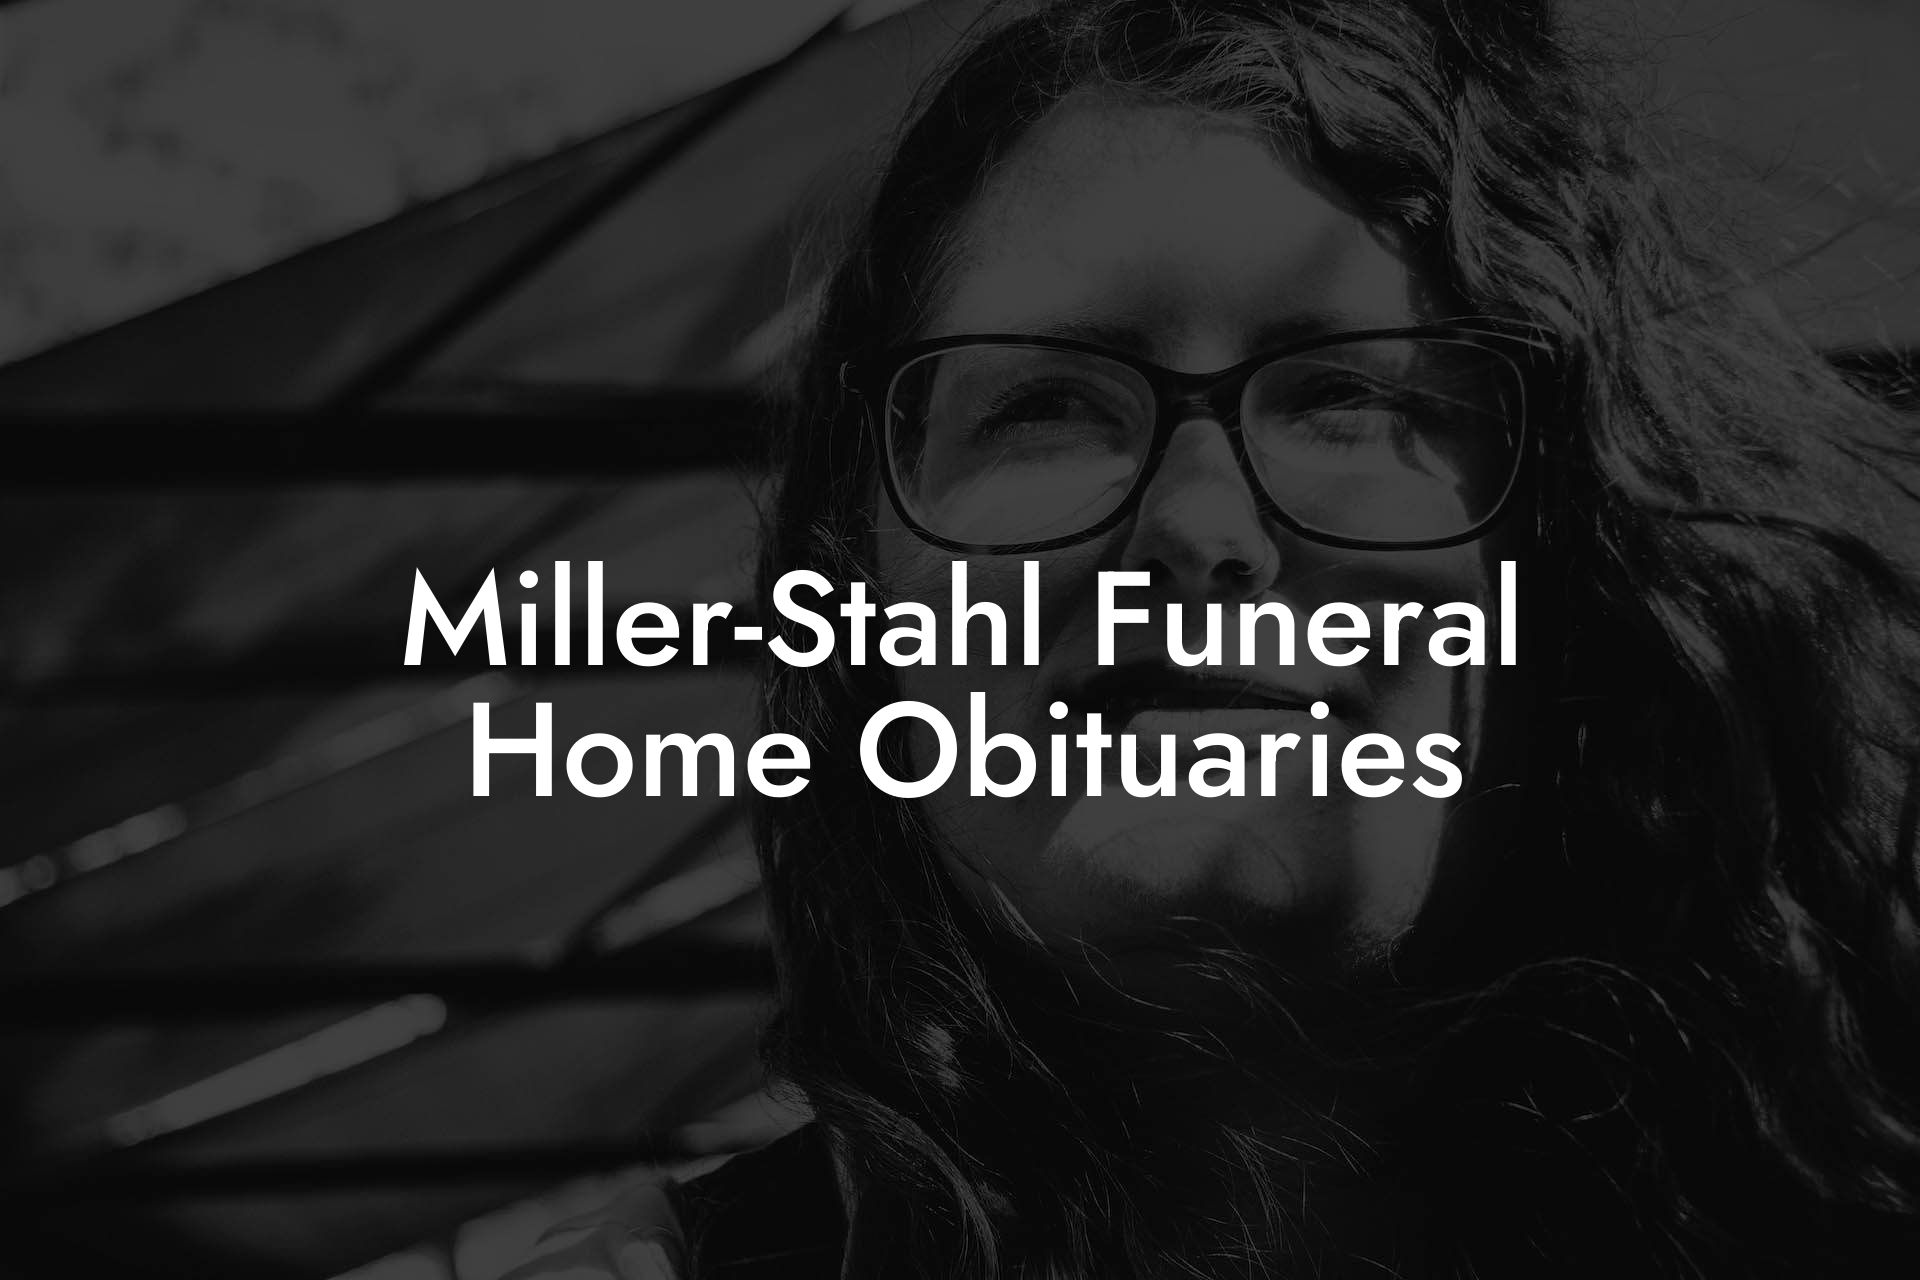 Miller-Stahl Funeral Home Obituaries